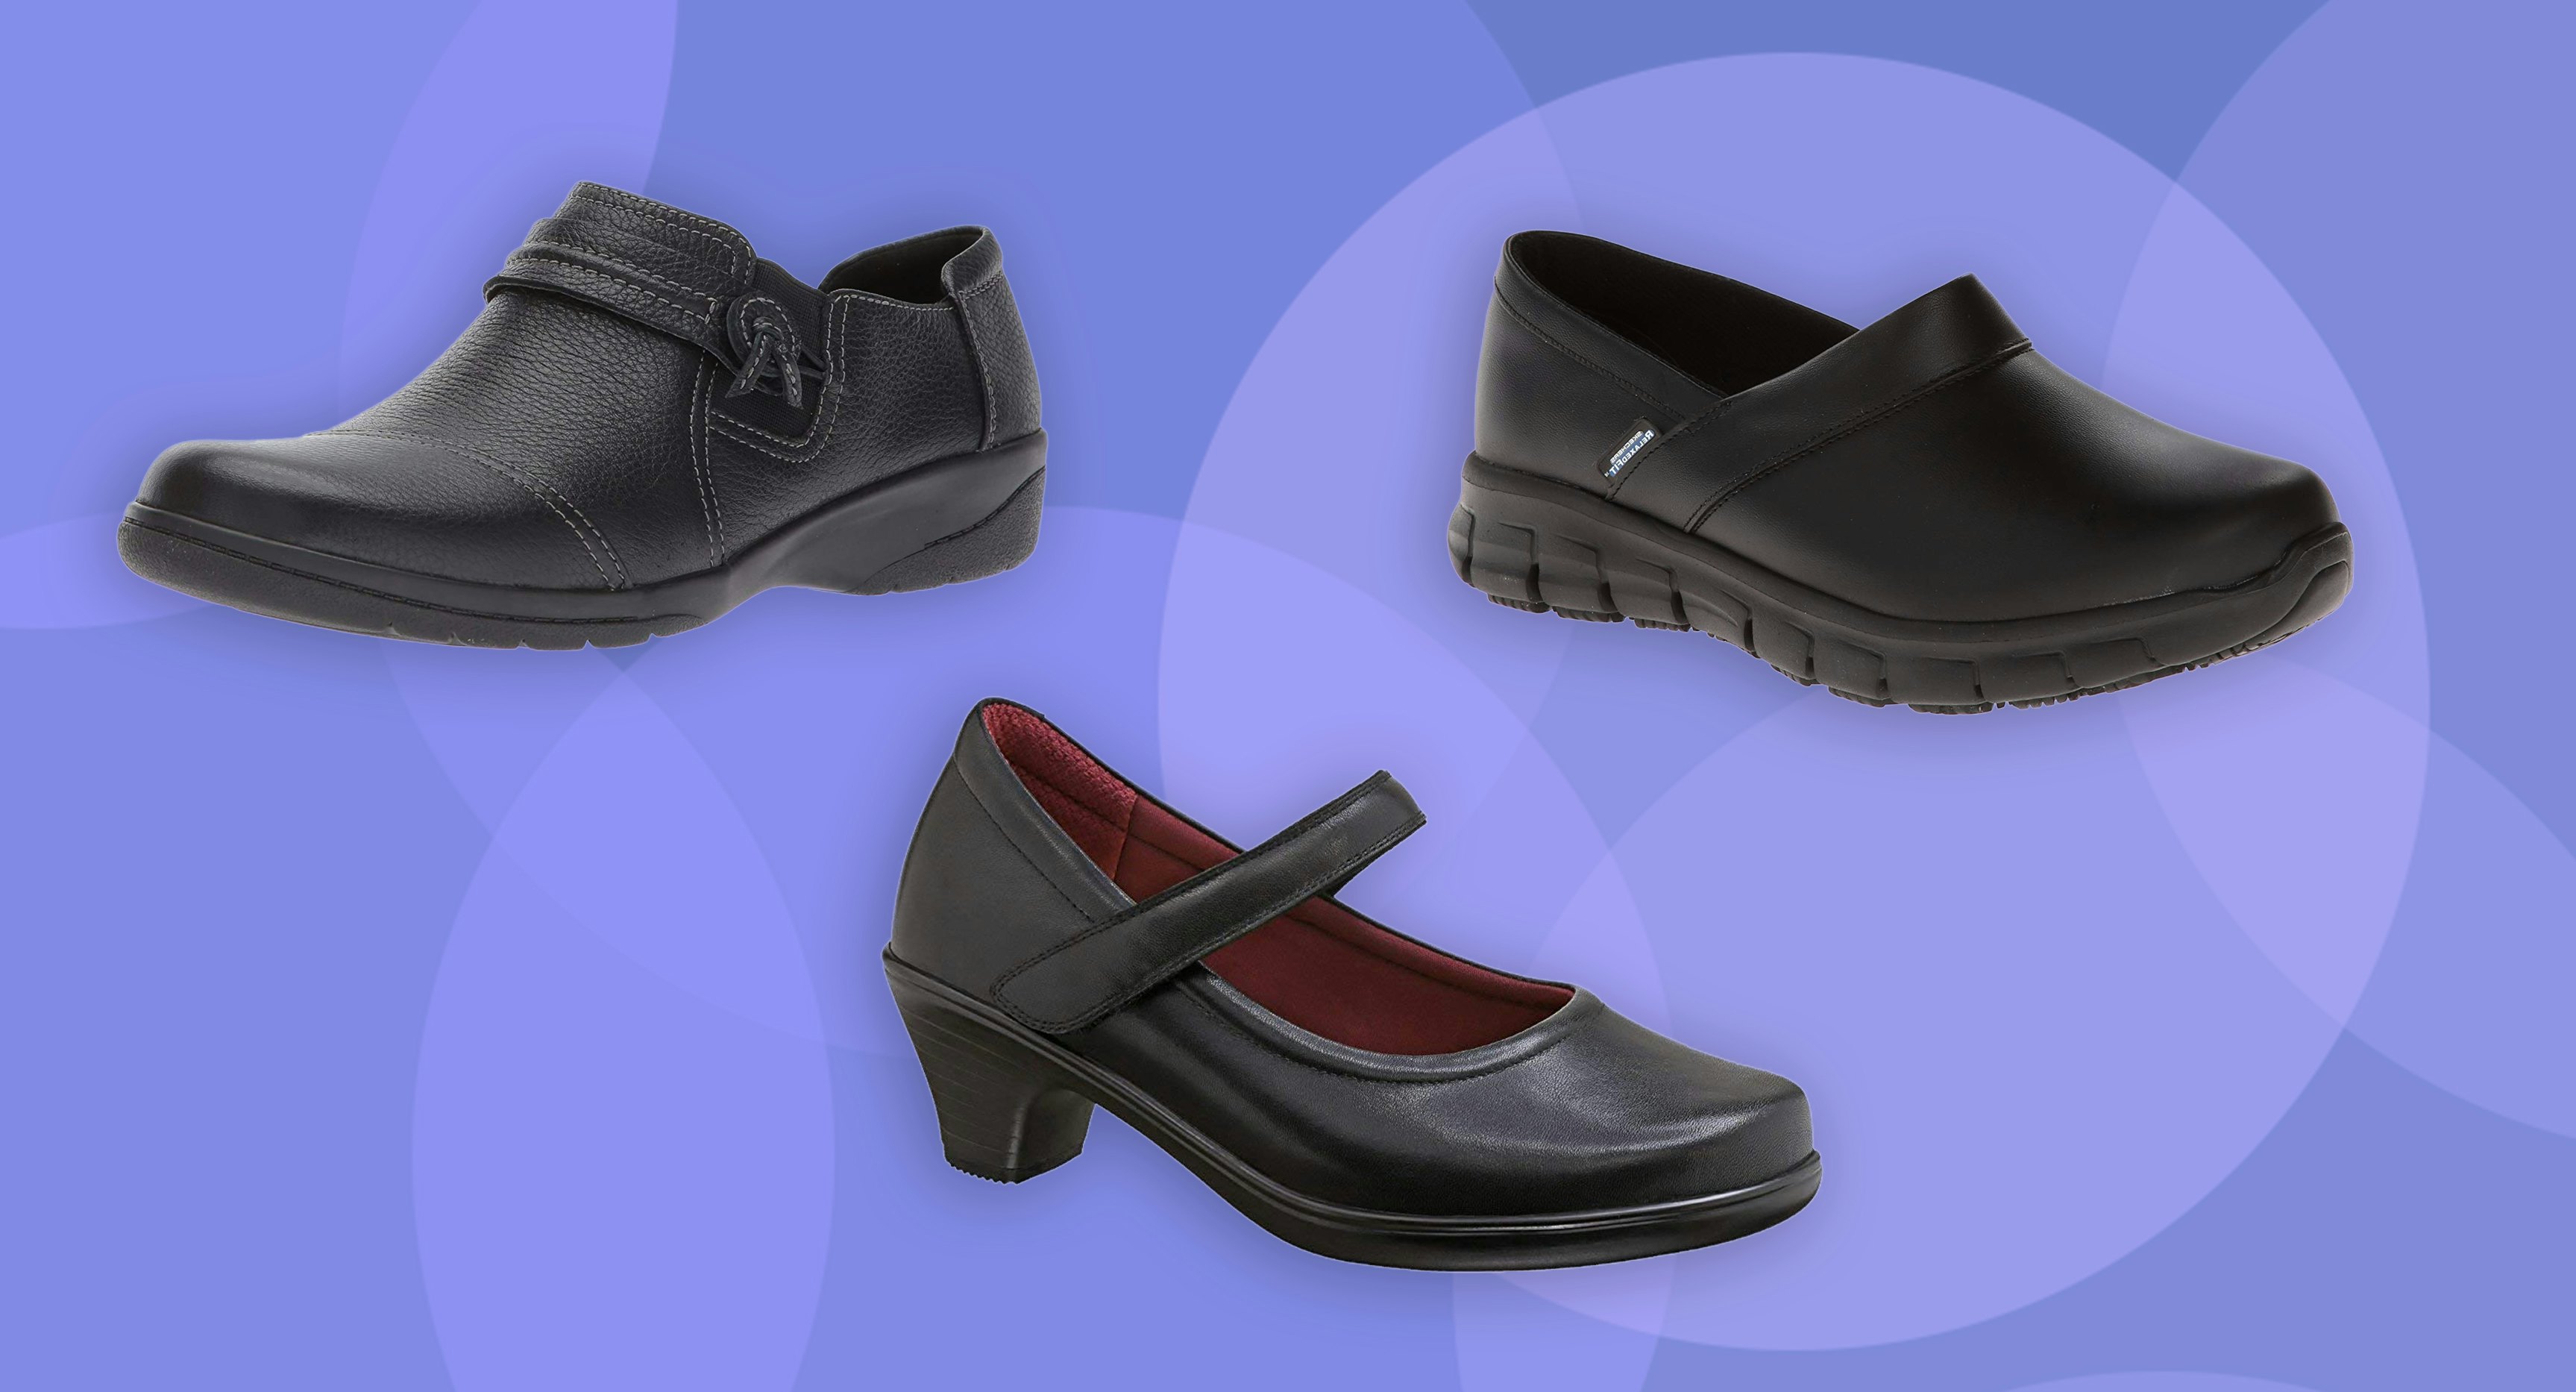 clarks shoes for plantar fasciitis women's